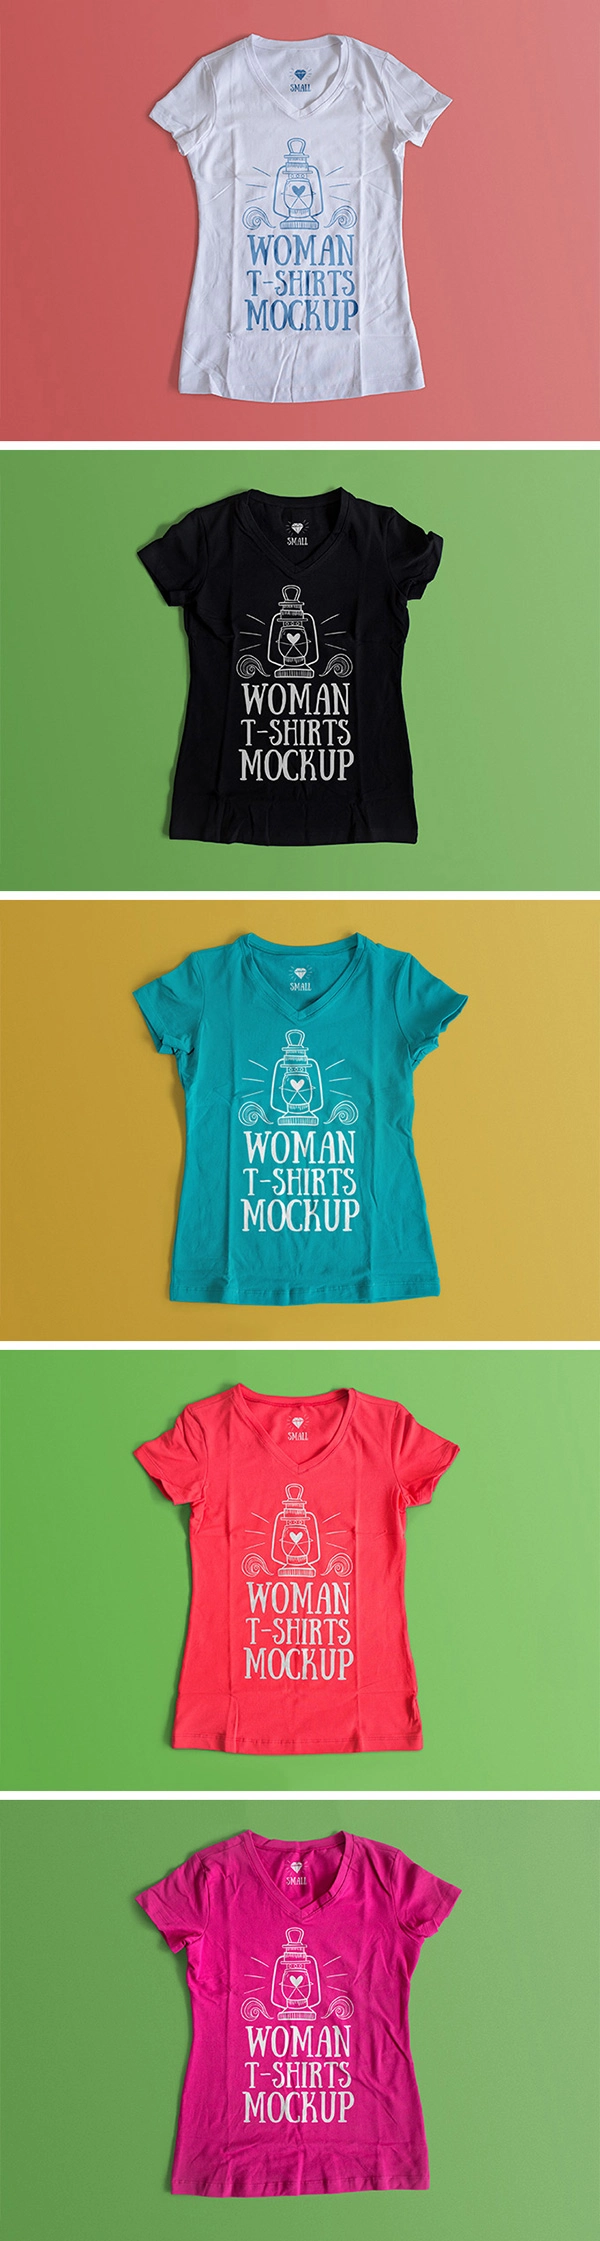 Woman T-Shirt Mockup